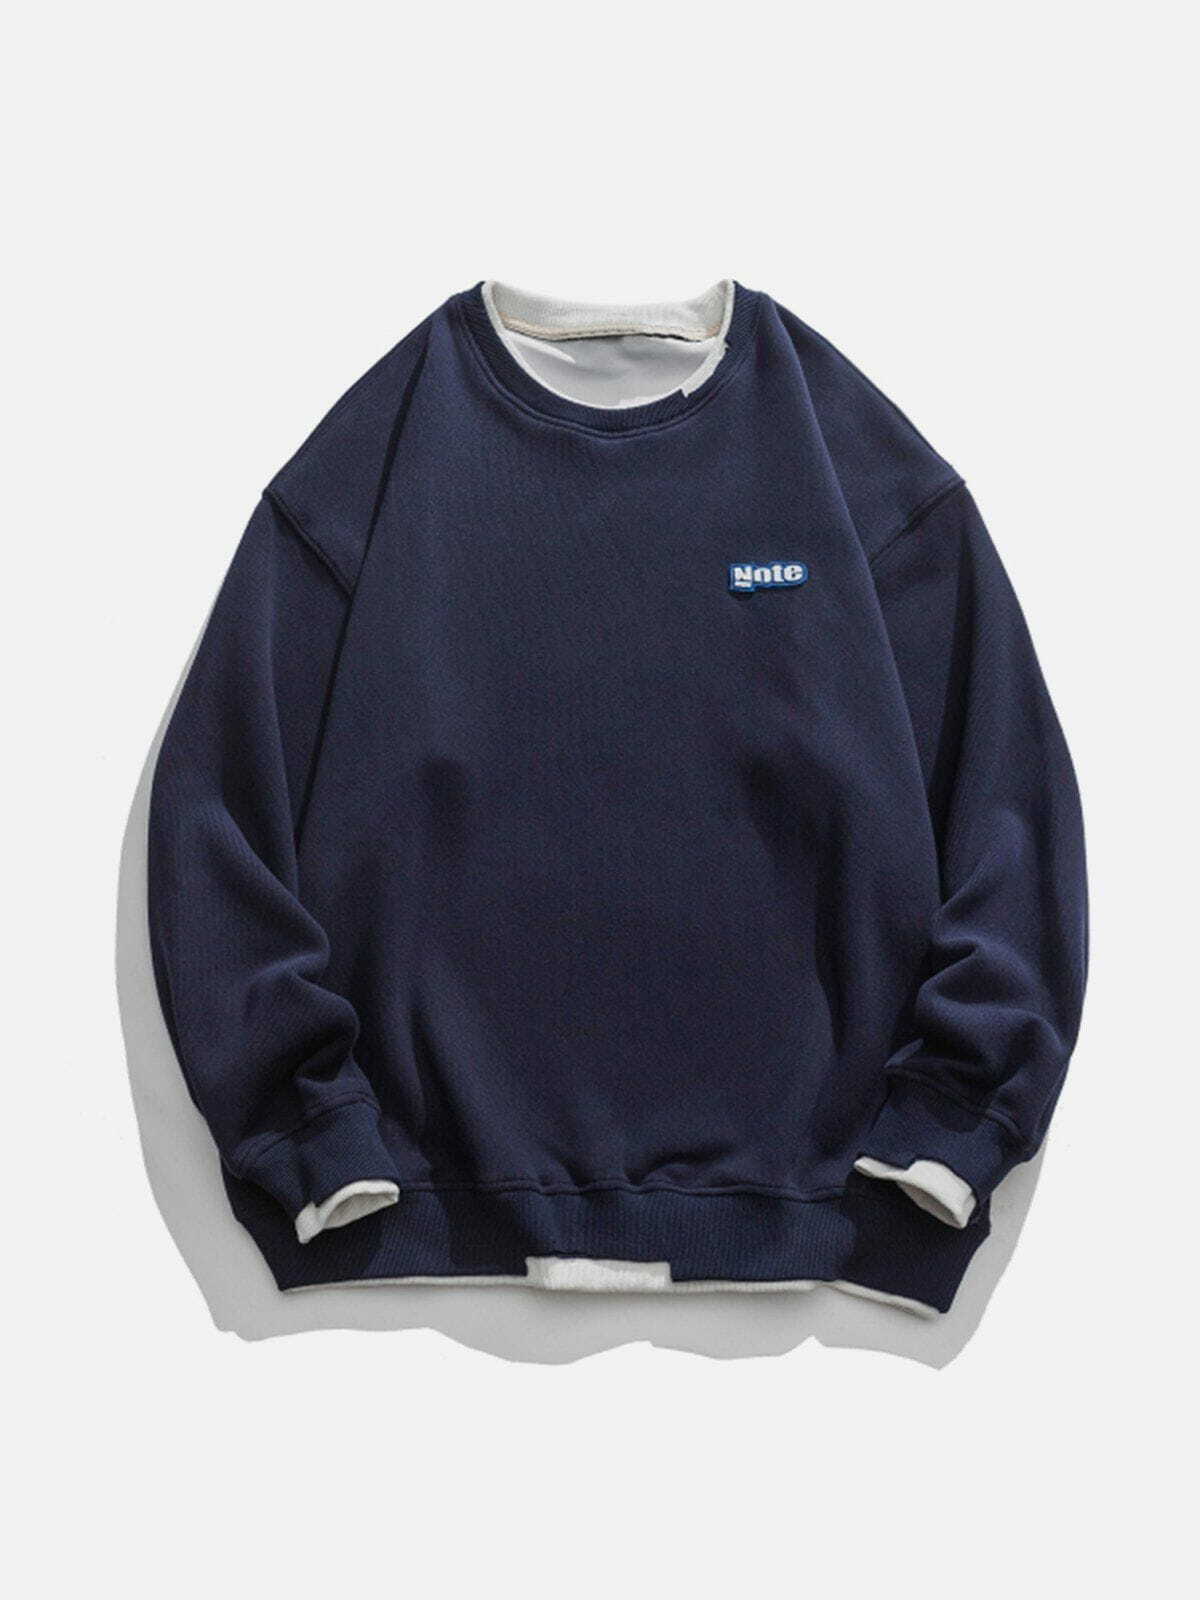 youthful fake two sweatshirt edgy  retro streetwear top 3246